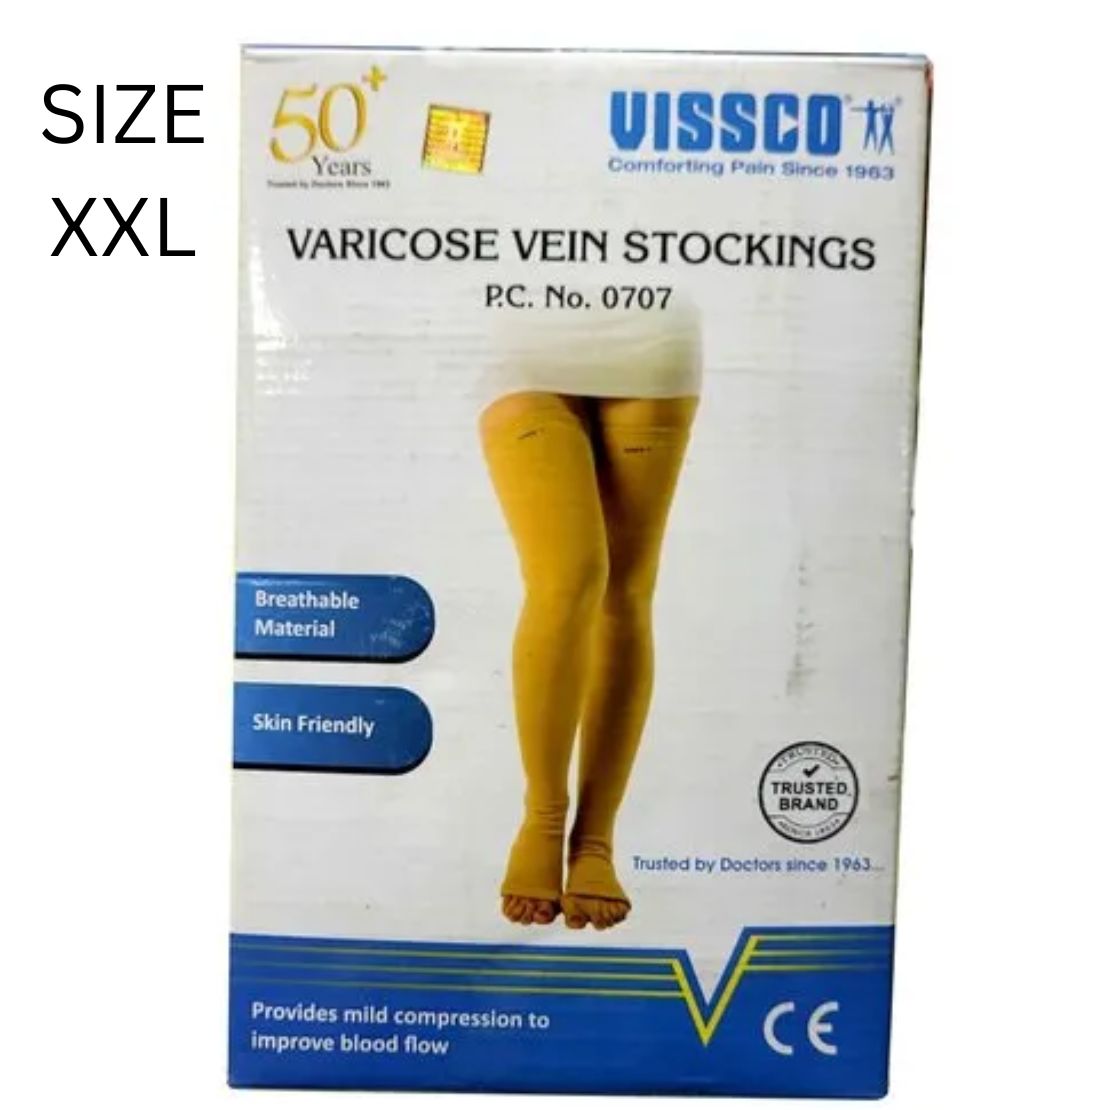 Buy Vissco Varicose Vein Stockings for best price in India at